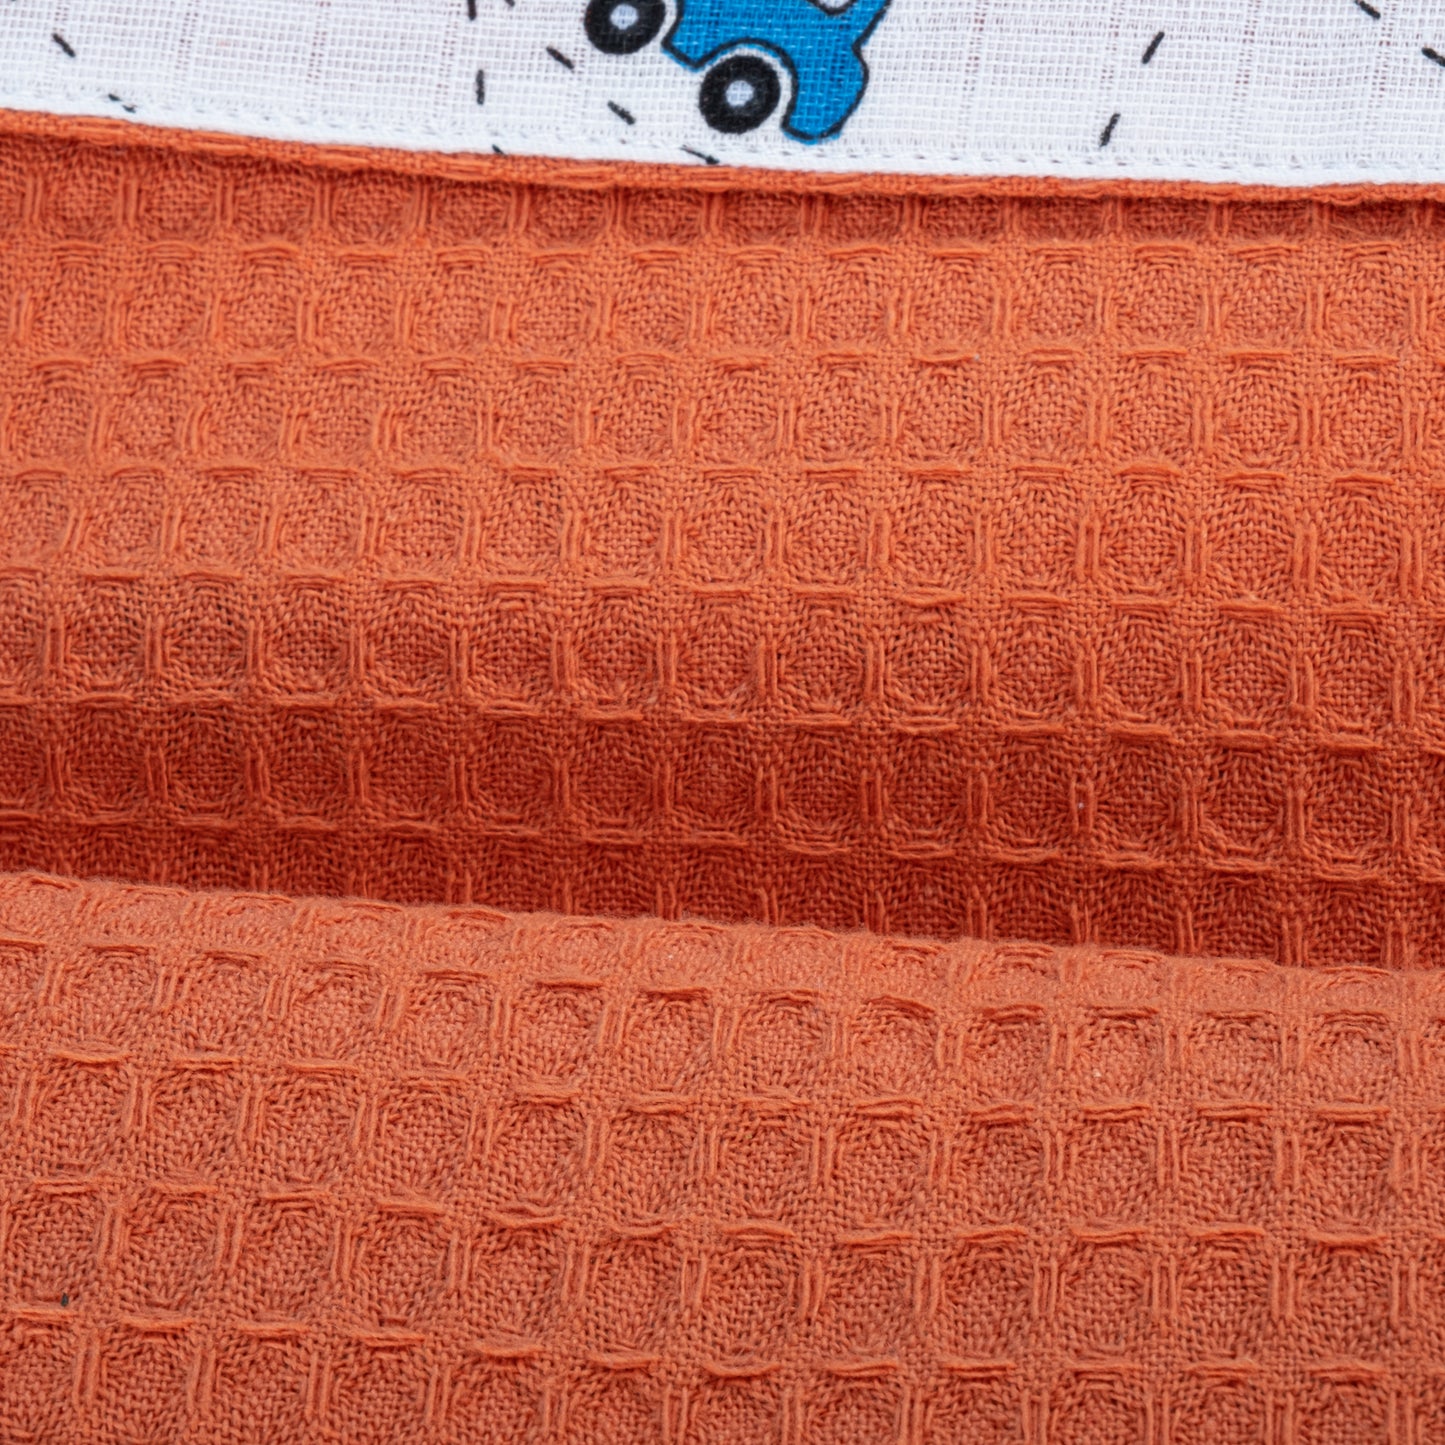 Pique Blanket - Double Side - Orange Honeycomb - Colorful Cars